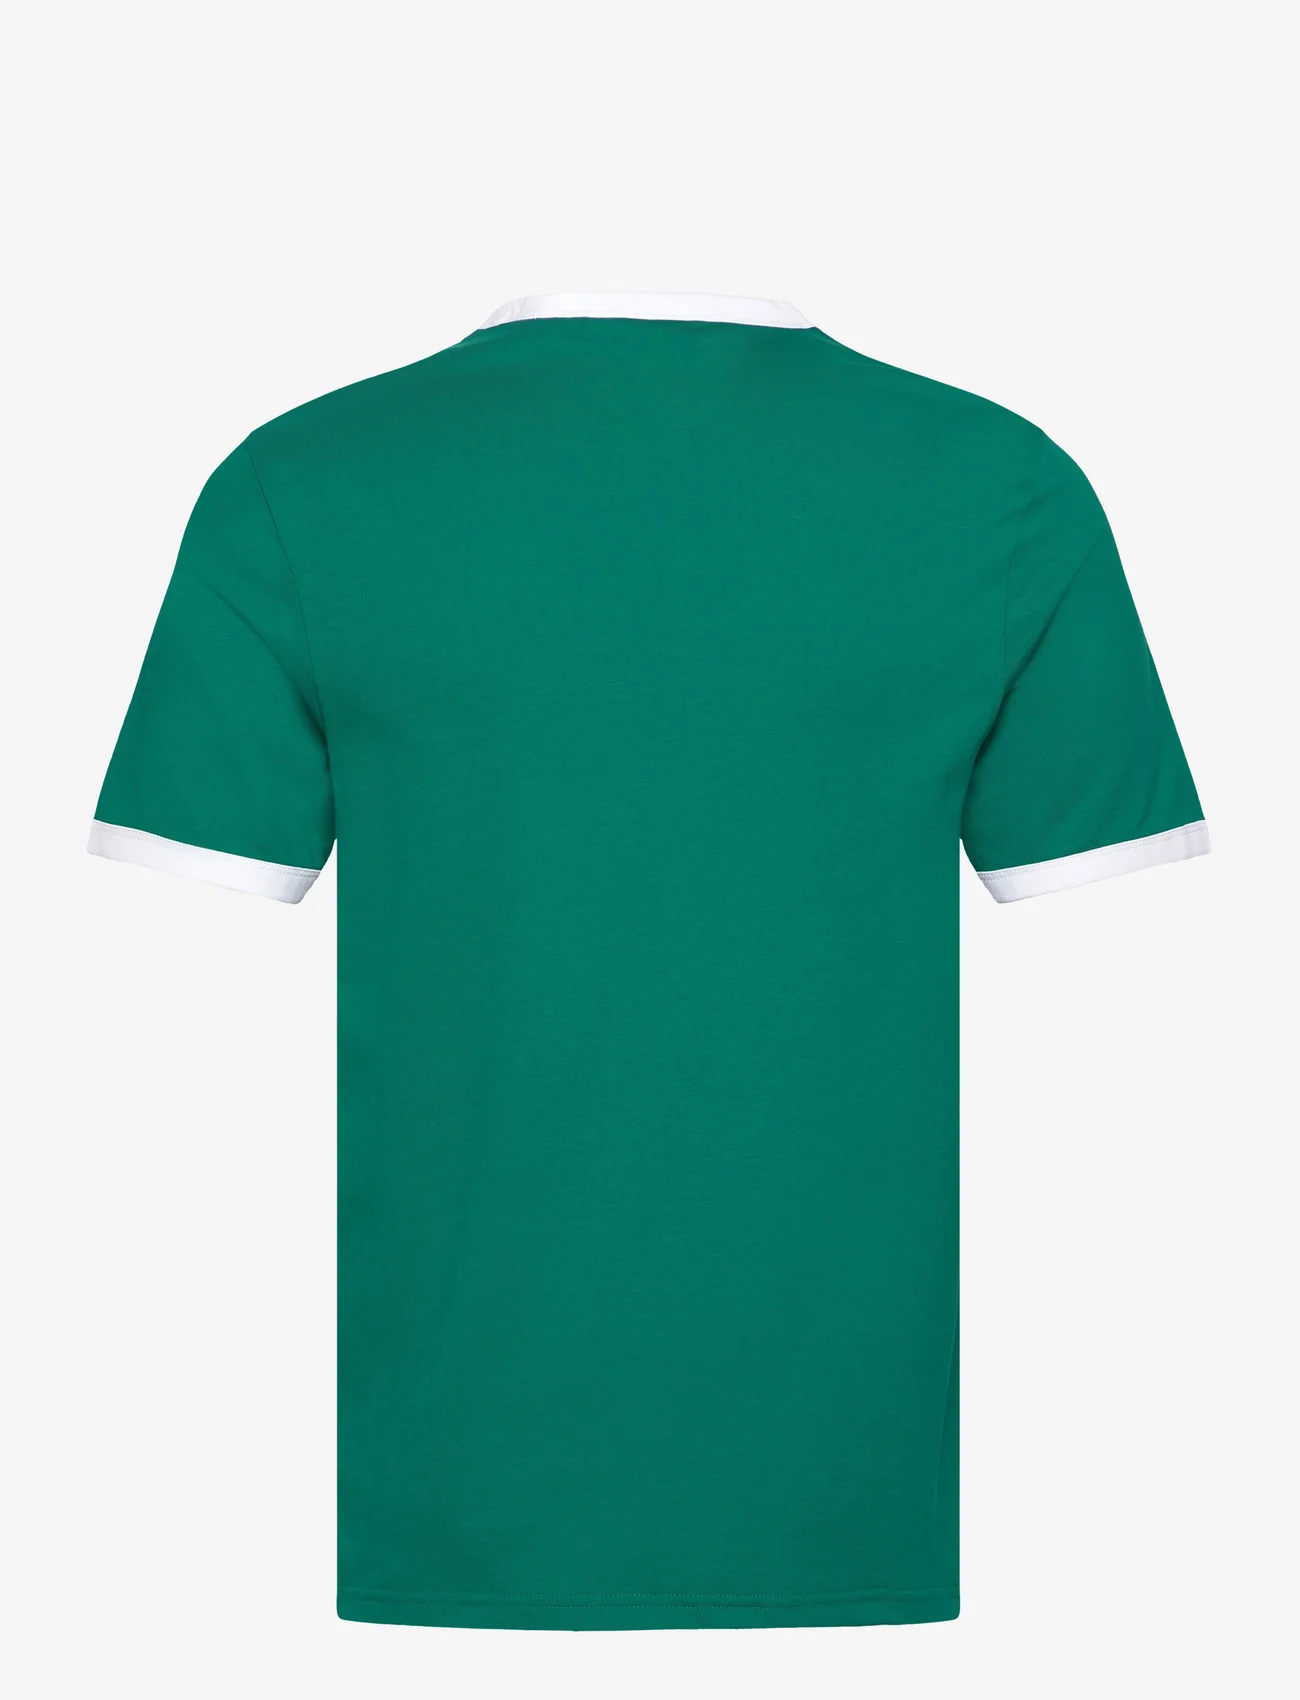 Lyle & Scott - Ringer T-Shirt - lowest prices - x166 court green / white - 1